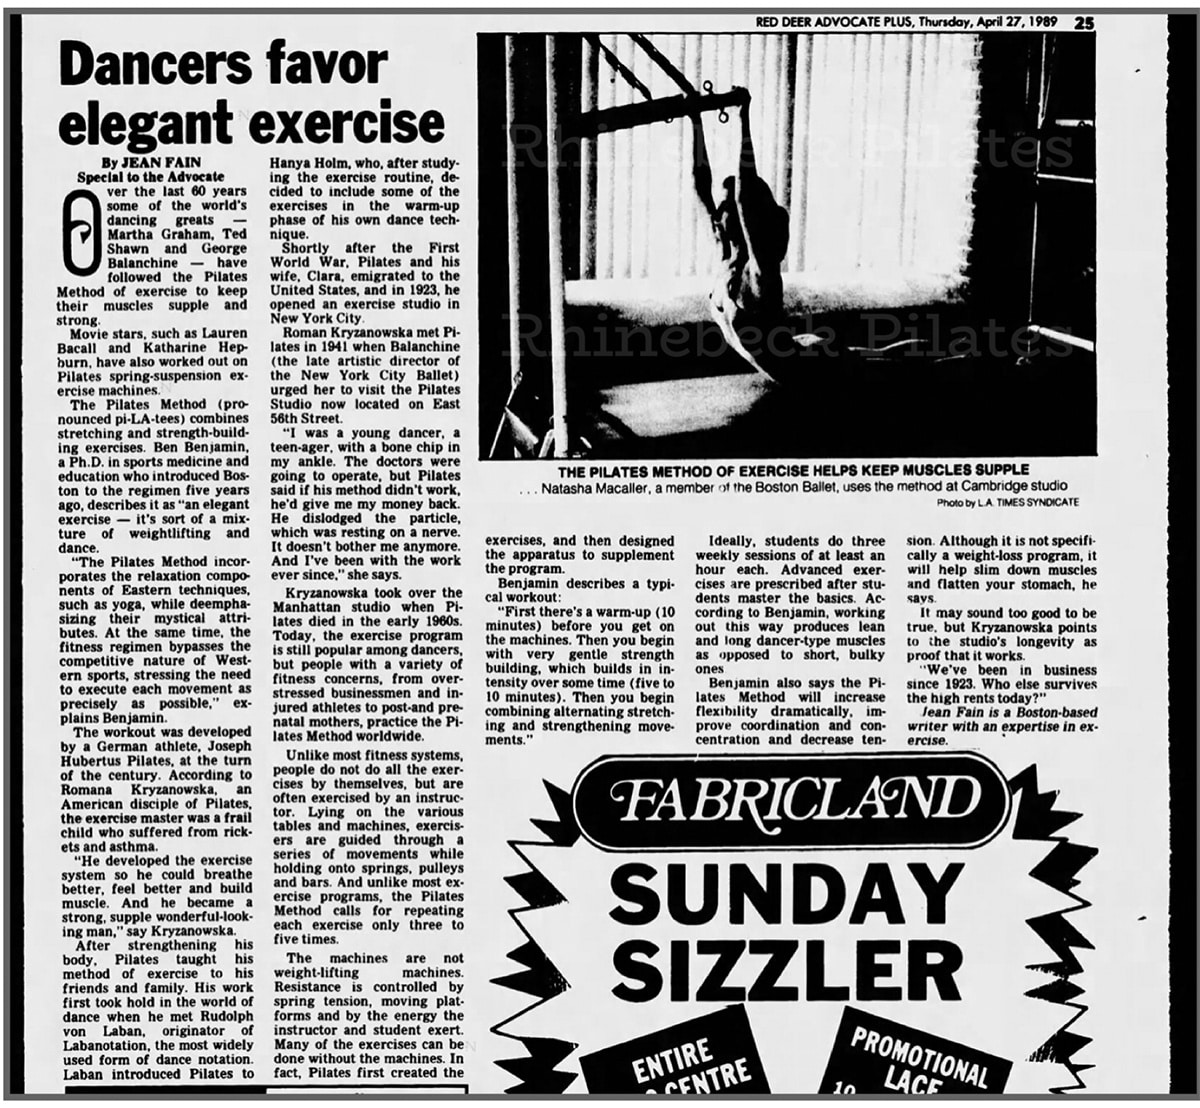 Romana Kryzanowska dancers favor elegant exercise pilates archive article